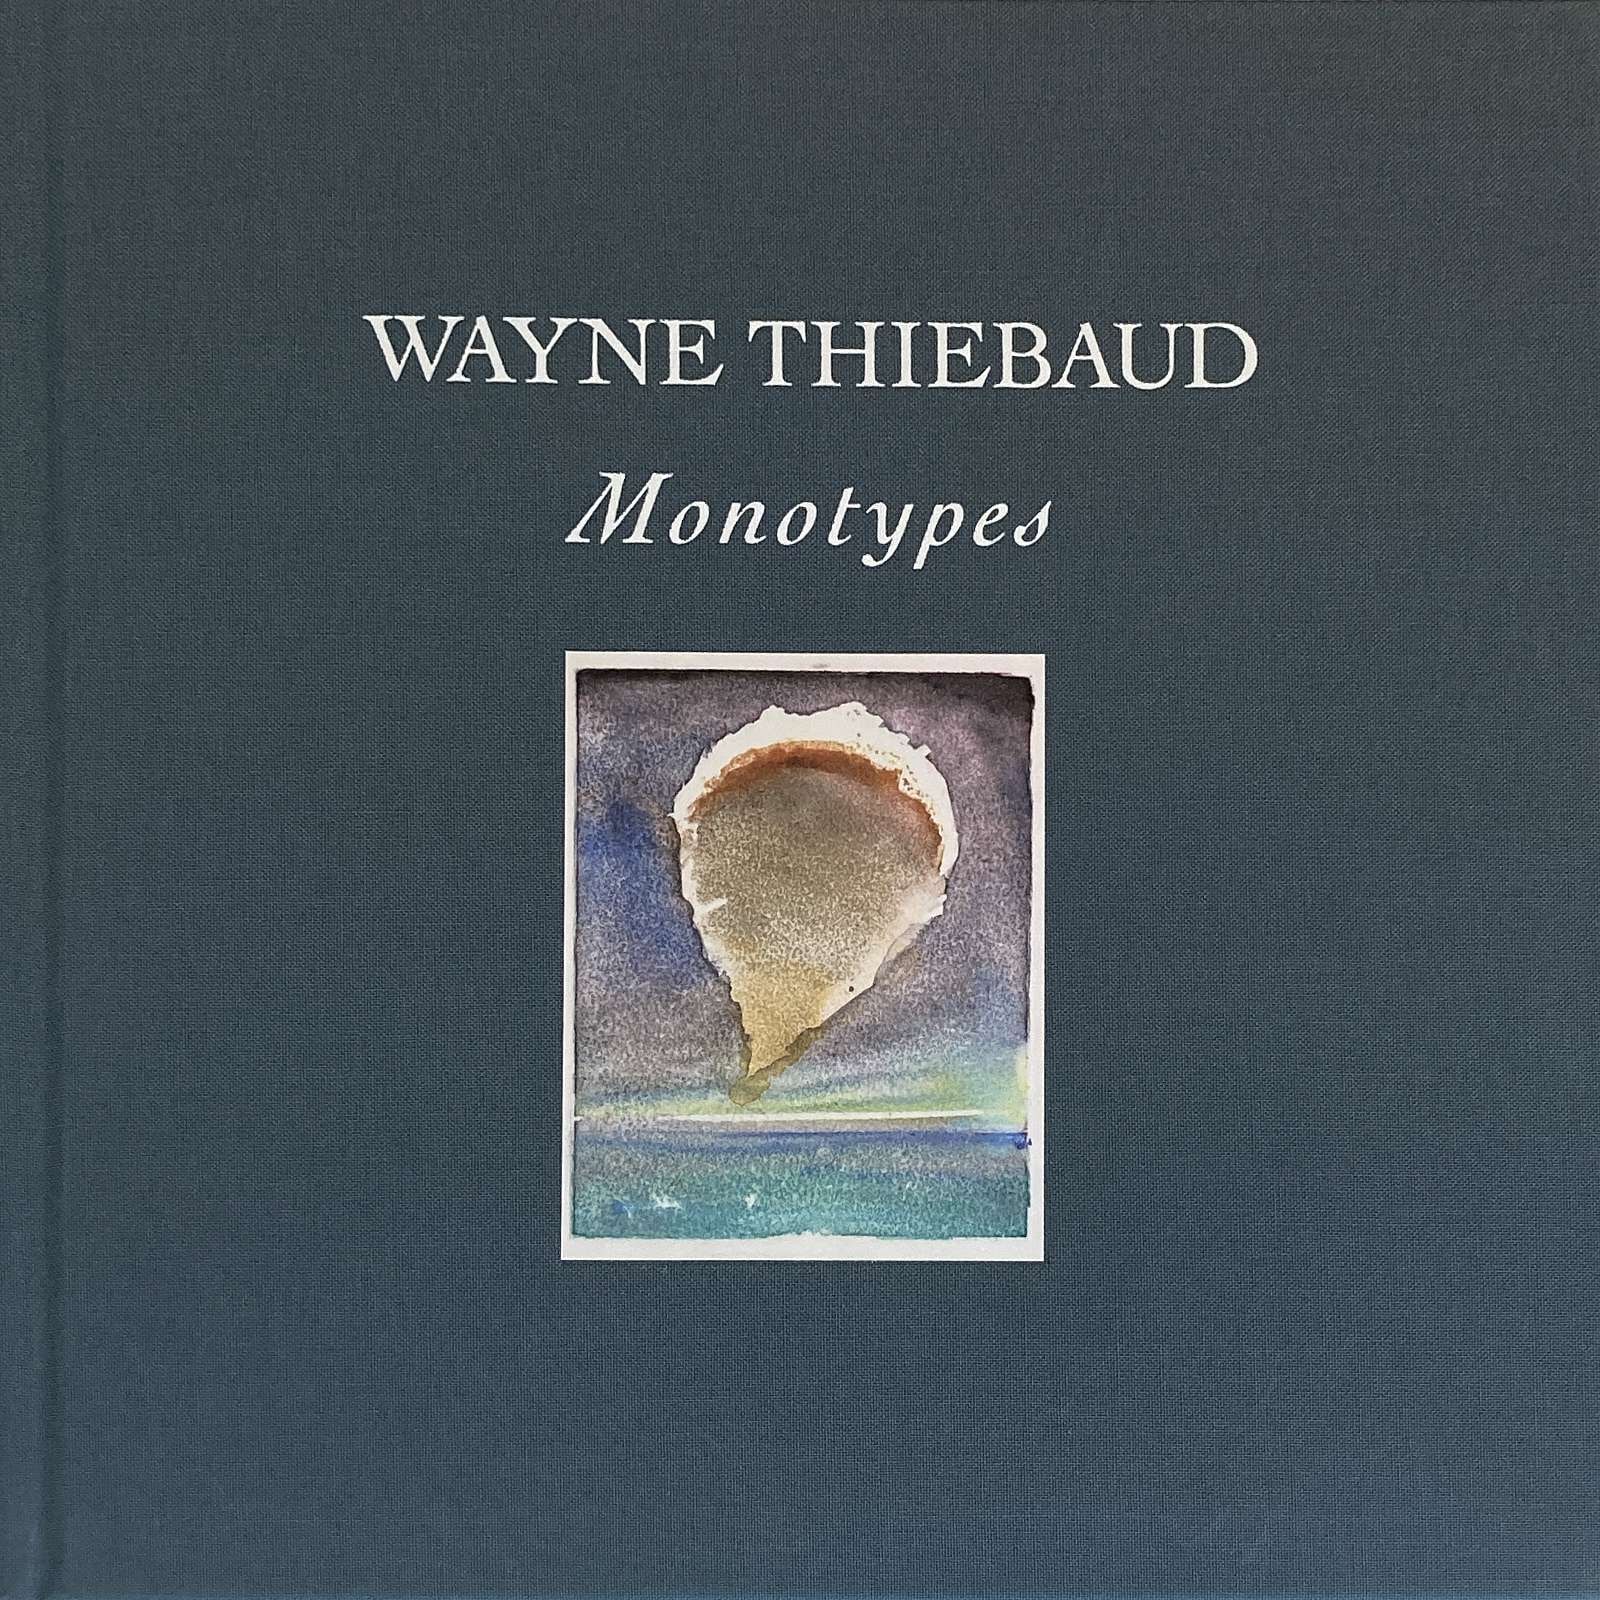 Wayne Thiebaud: Monotypes - December 1, 2018 - March 2, 2019 - Publications - Paul Thiebaud Gallery